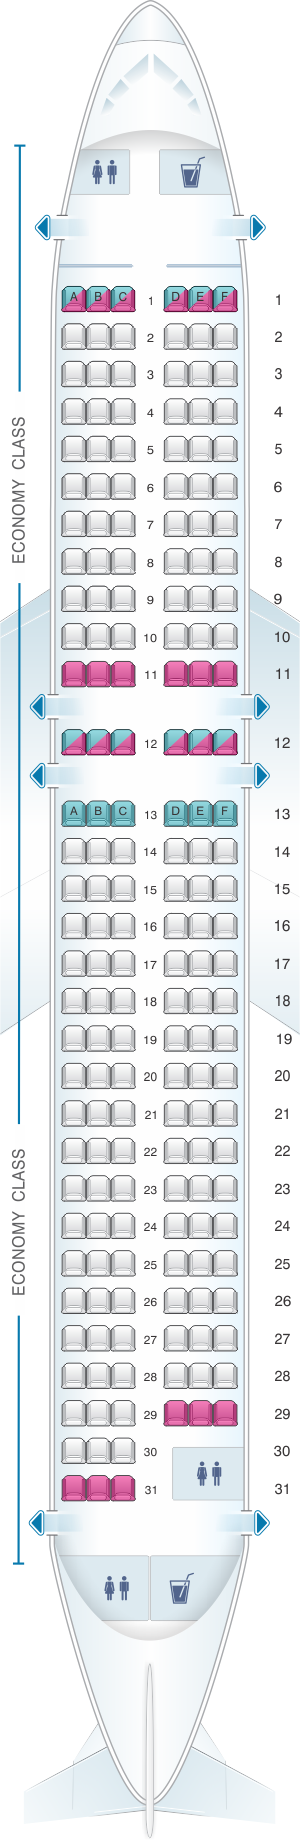 Seat Map Easyjet Airbus A320 | SeatMaestro